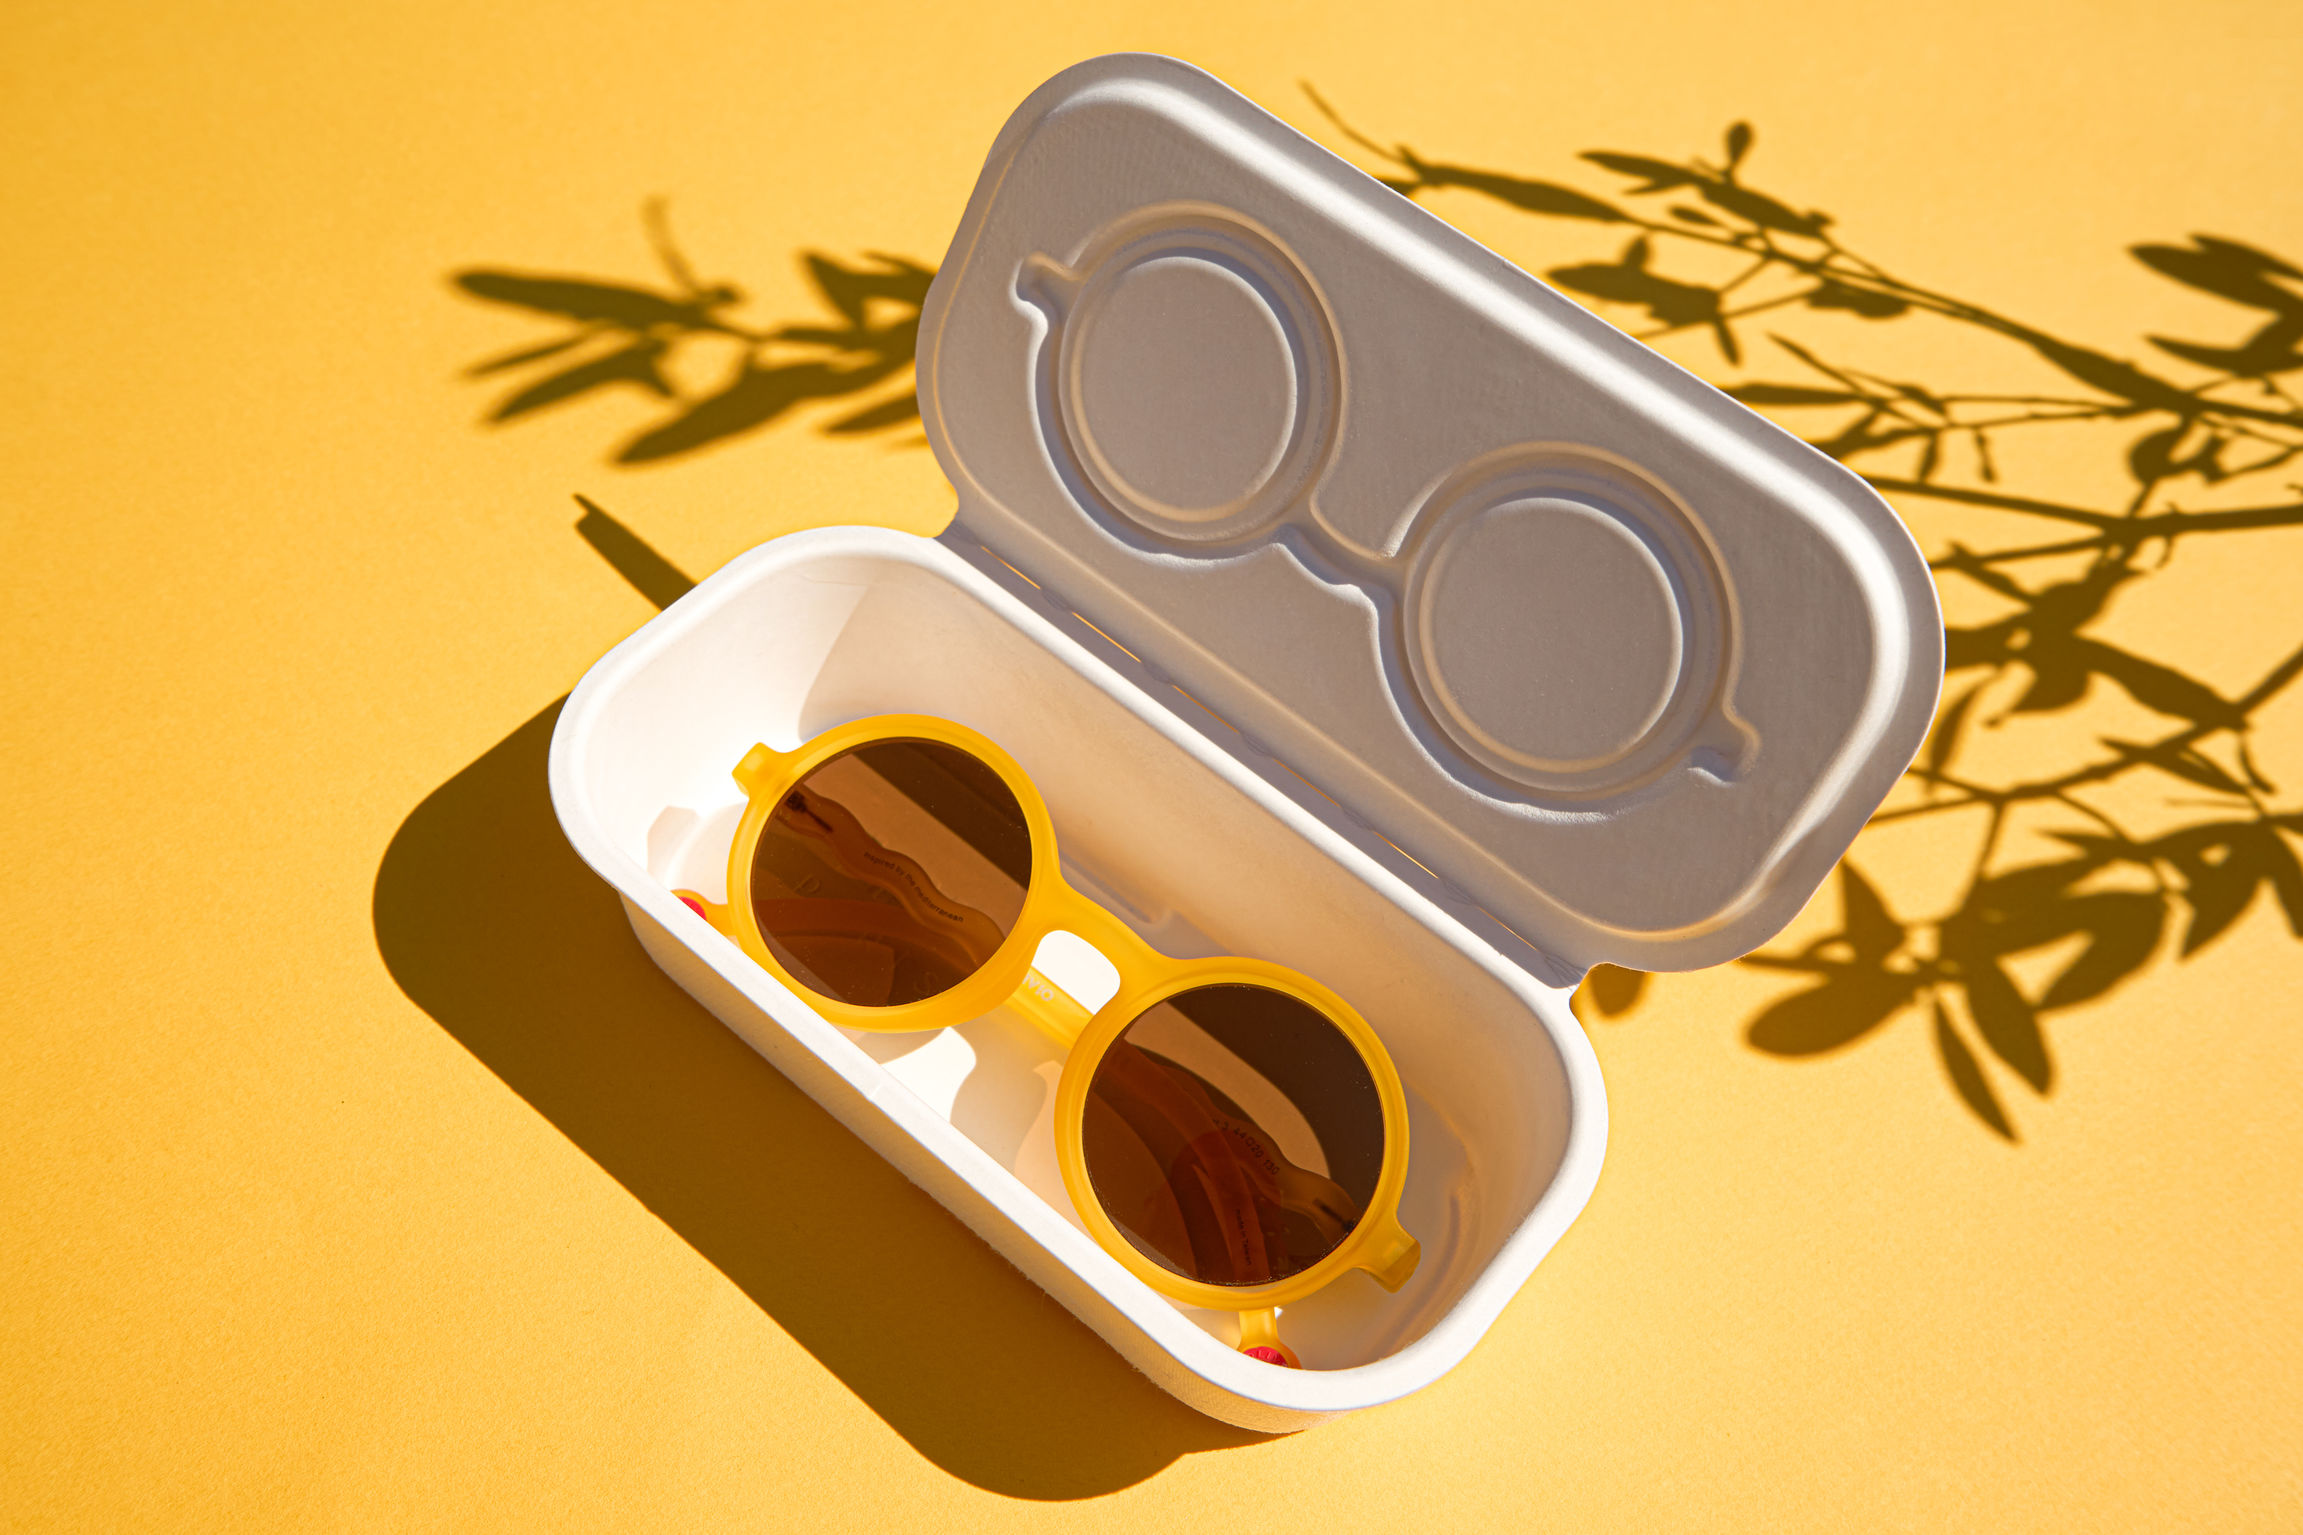 OLIVIO & CO Sunglasses Eco-Packaging